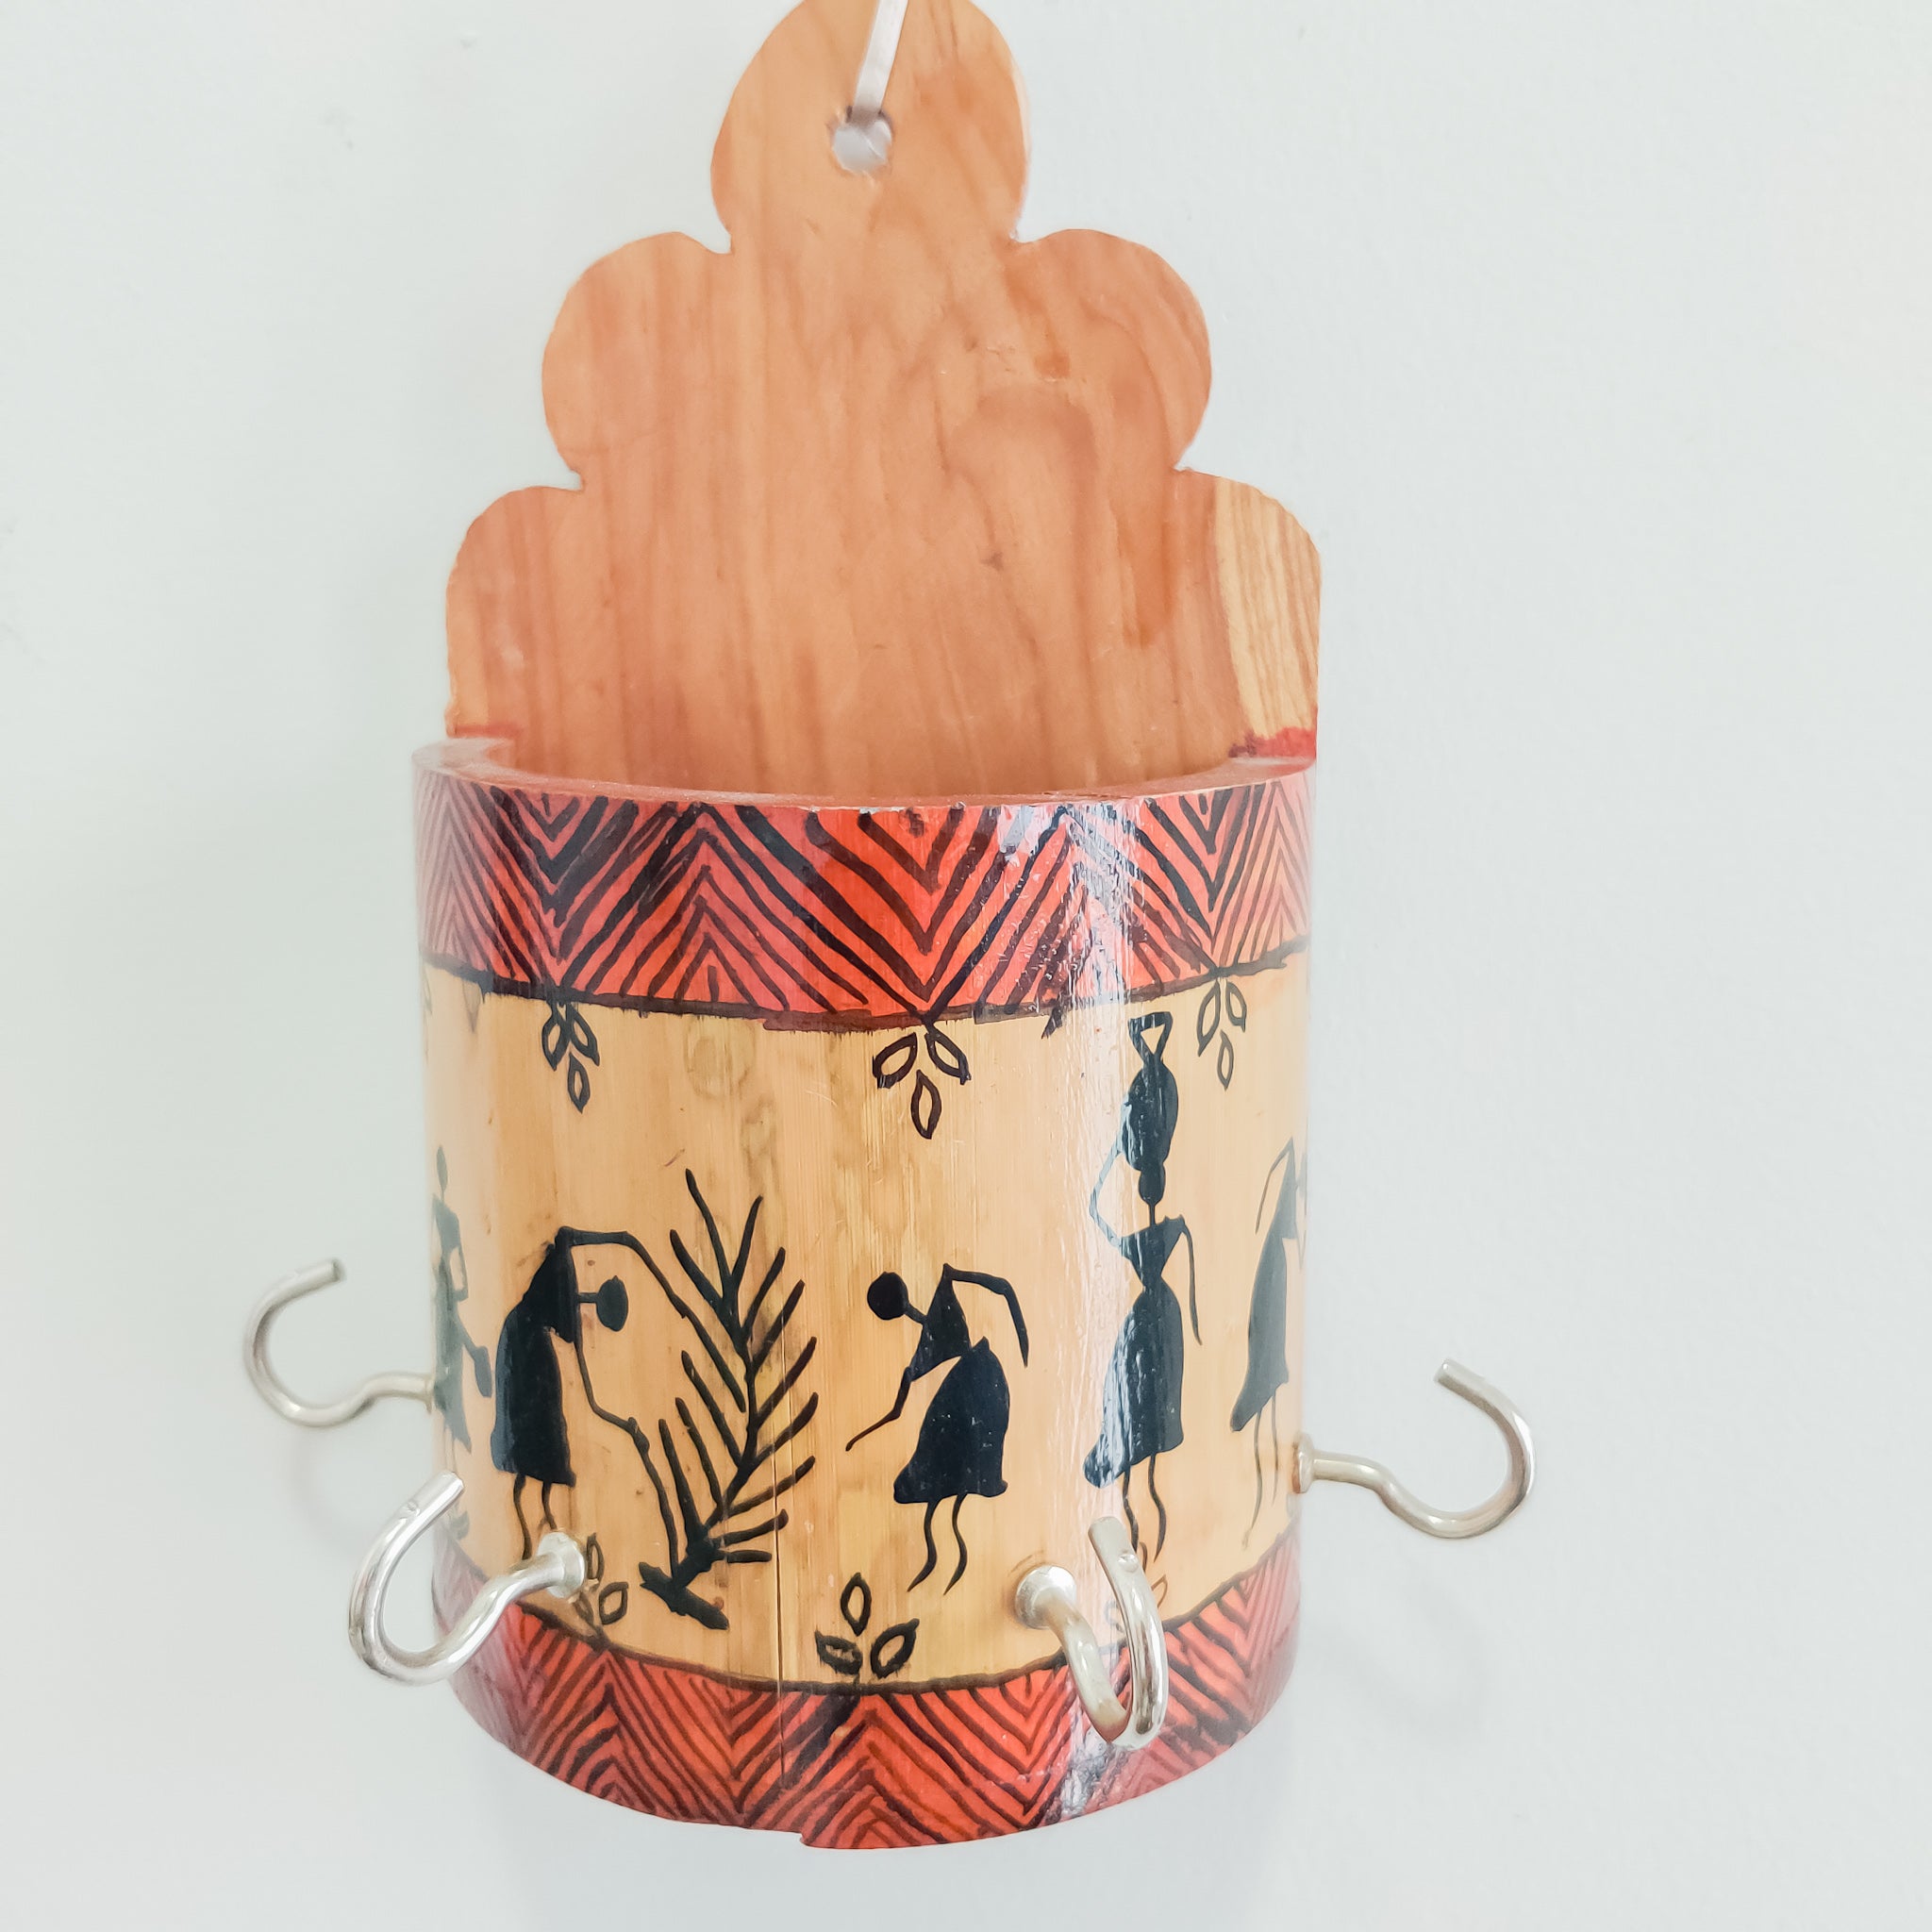 Bamboo Handpainted Worli Painting Key Holder / Stand Indian Tribal Art